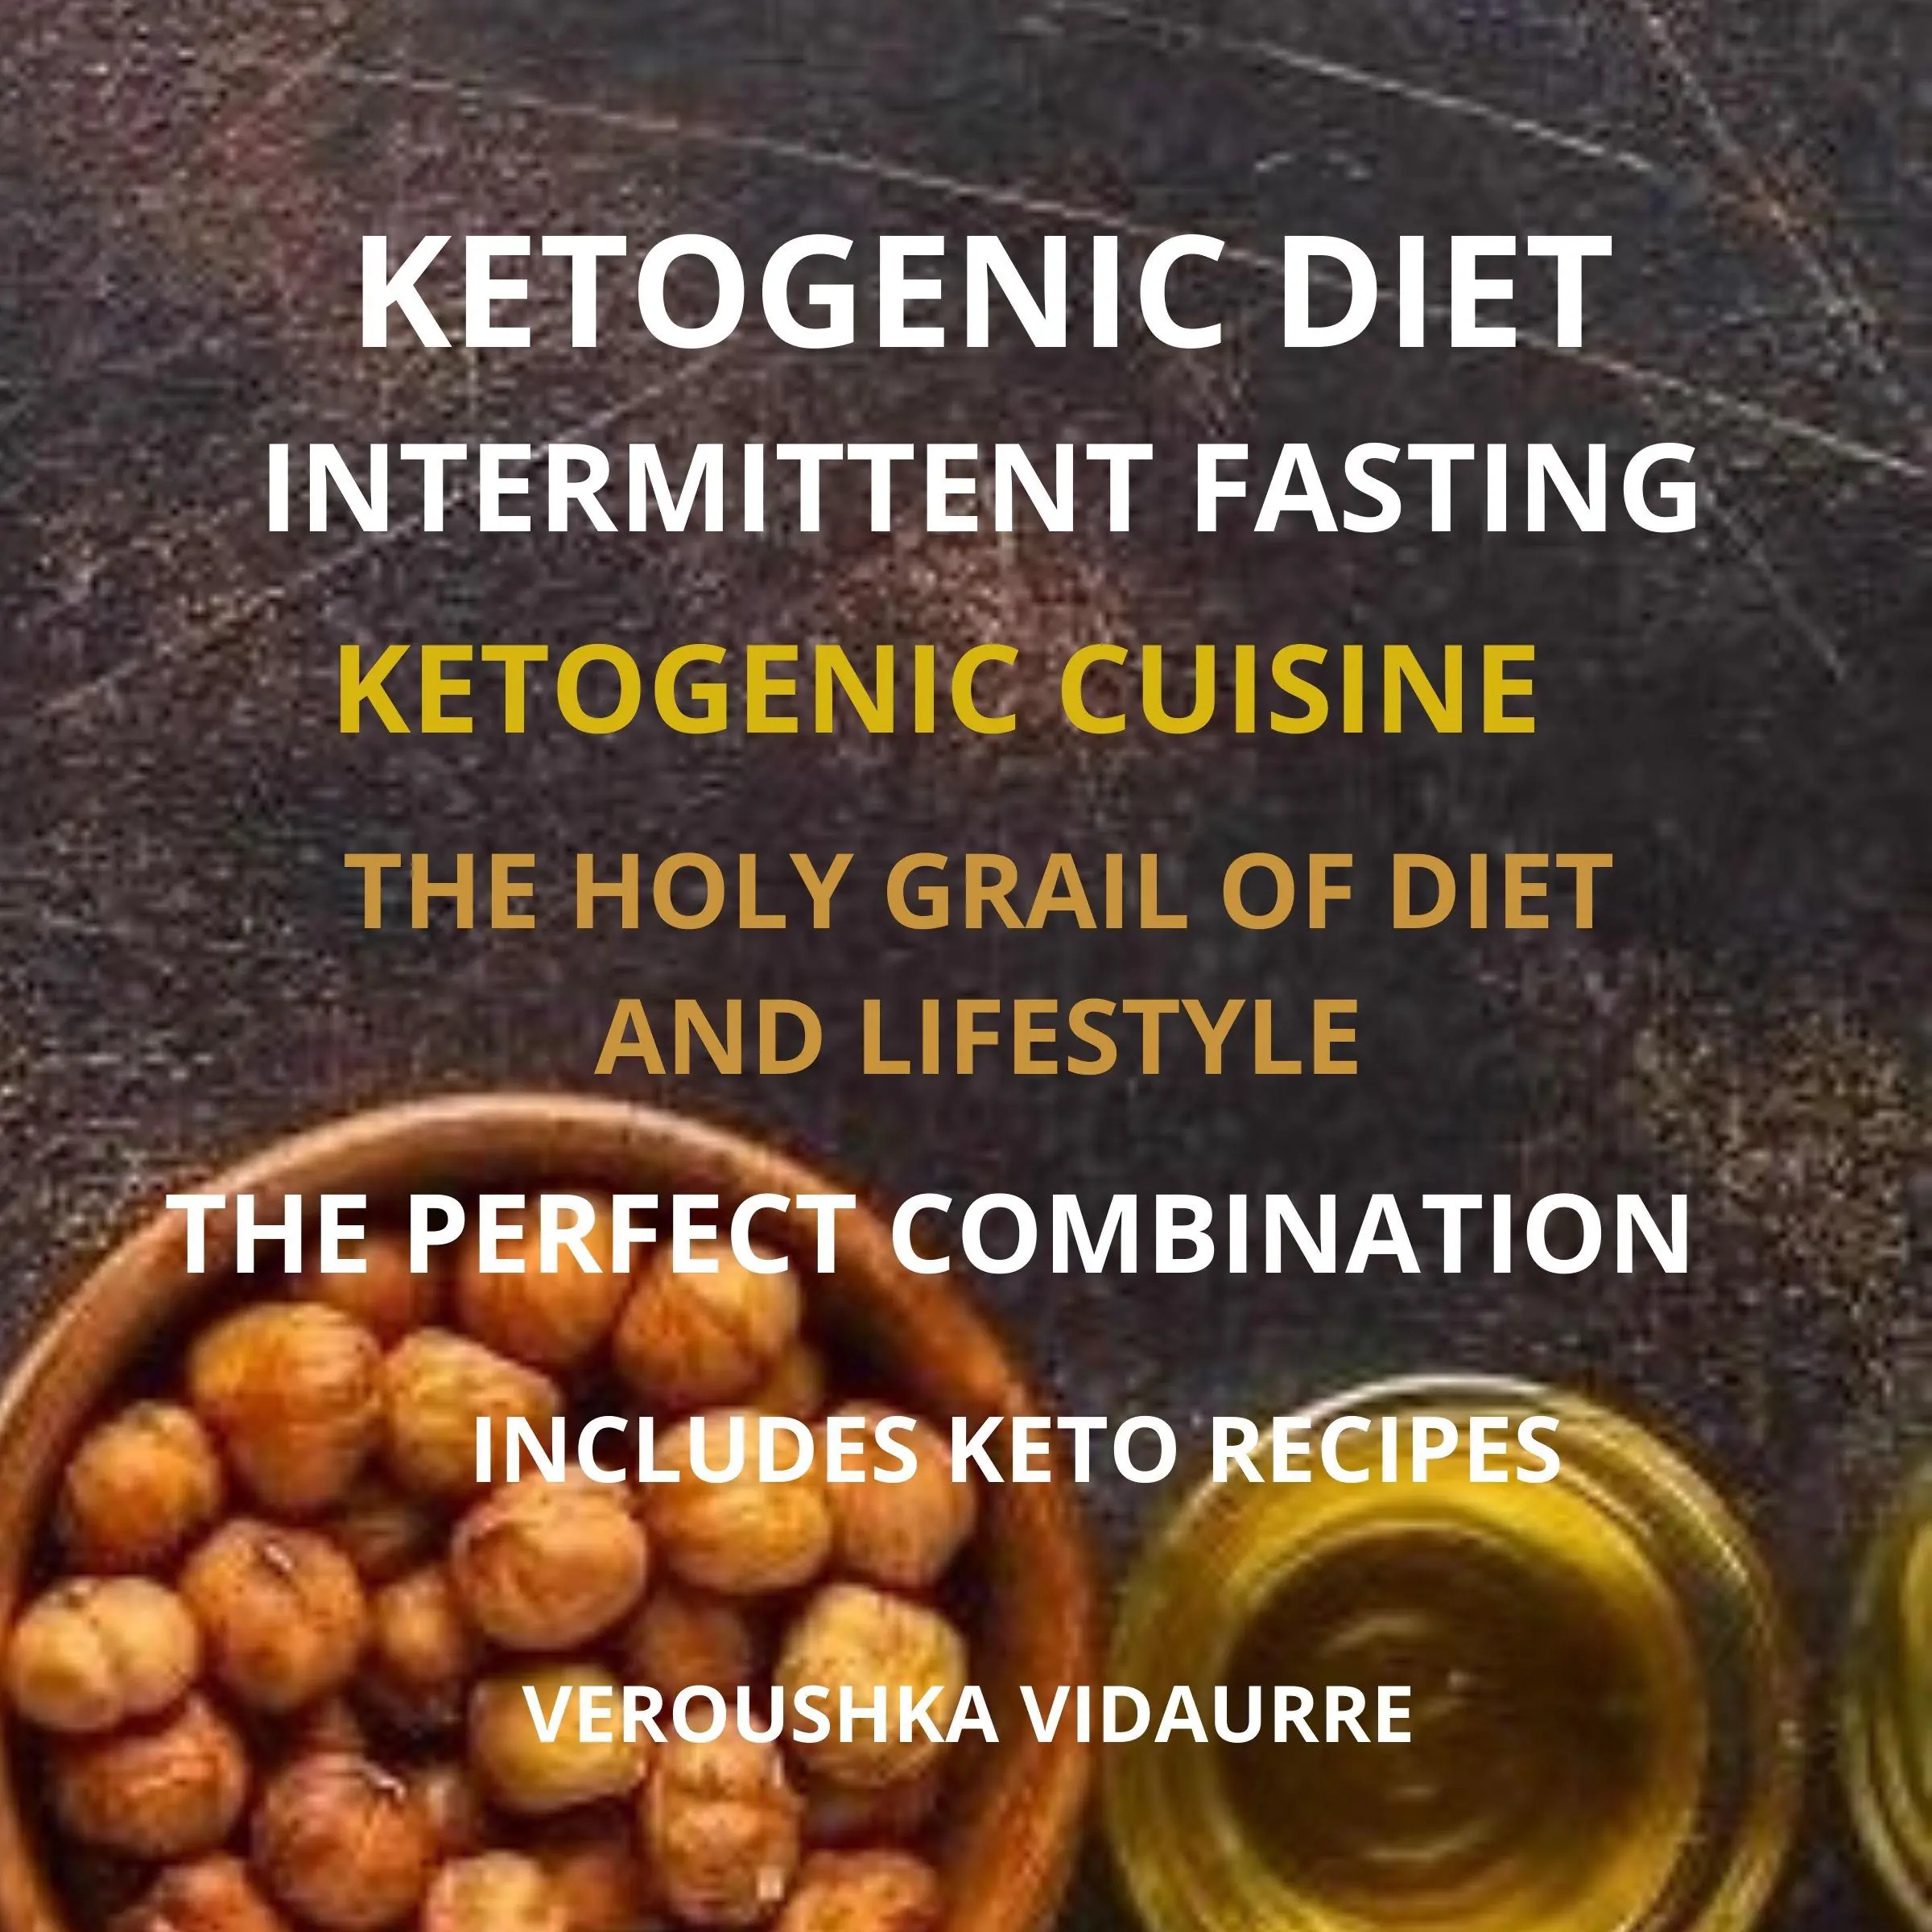 Ketogenic Diet Intermittent Fasting Audiobook by Veroushka Vidaurre